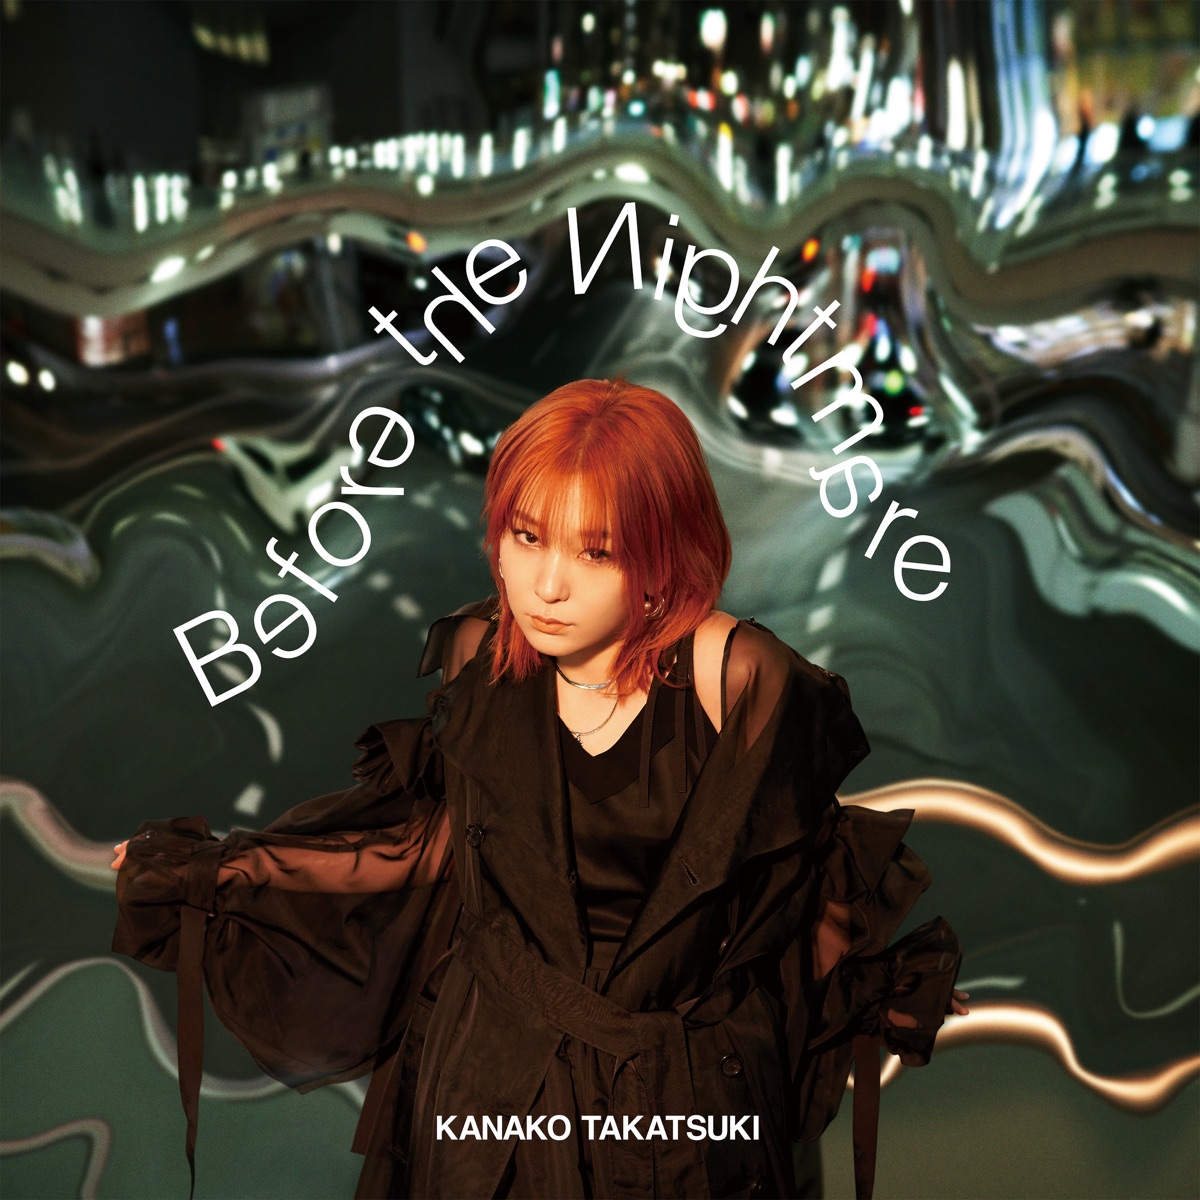 Cover art for『Kanako Takatsuki - Love myself, All myself』from the release『Before the Nightmare』